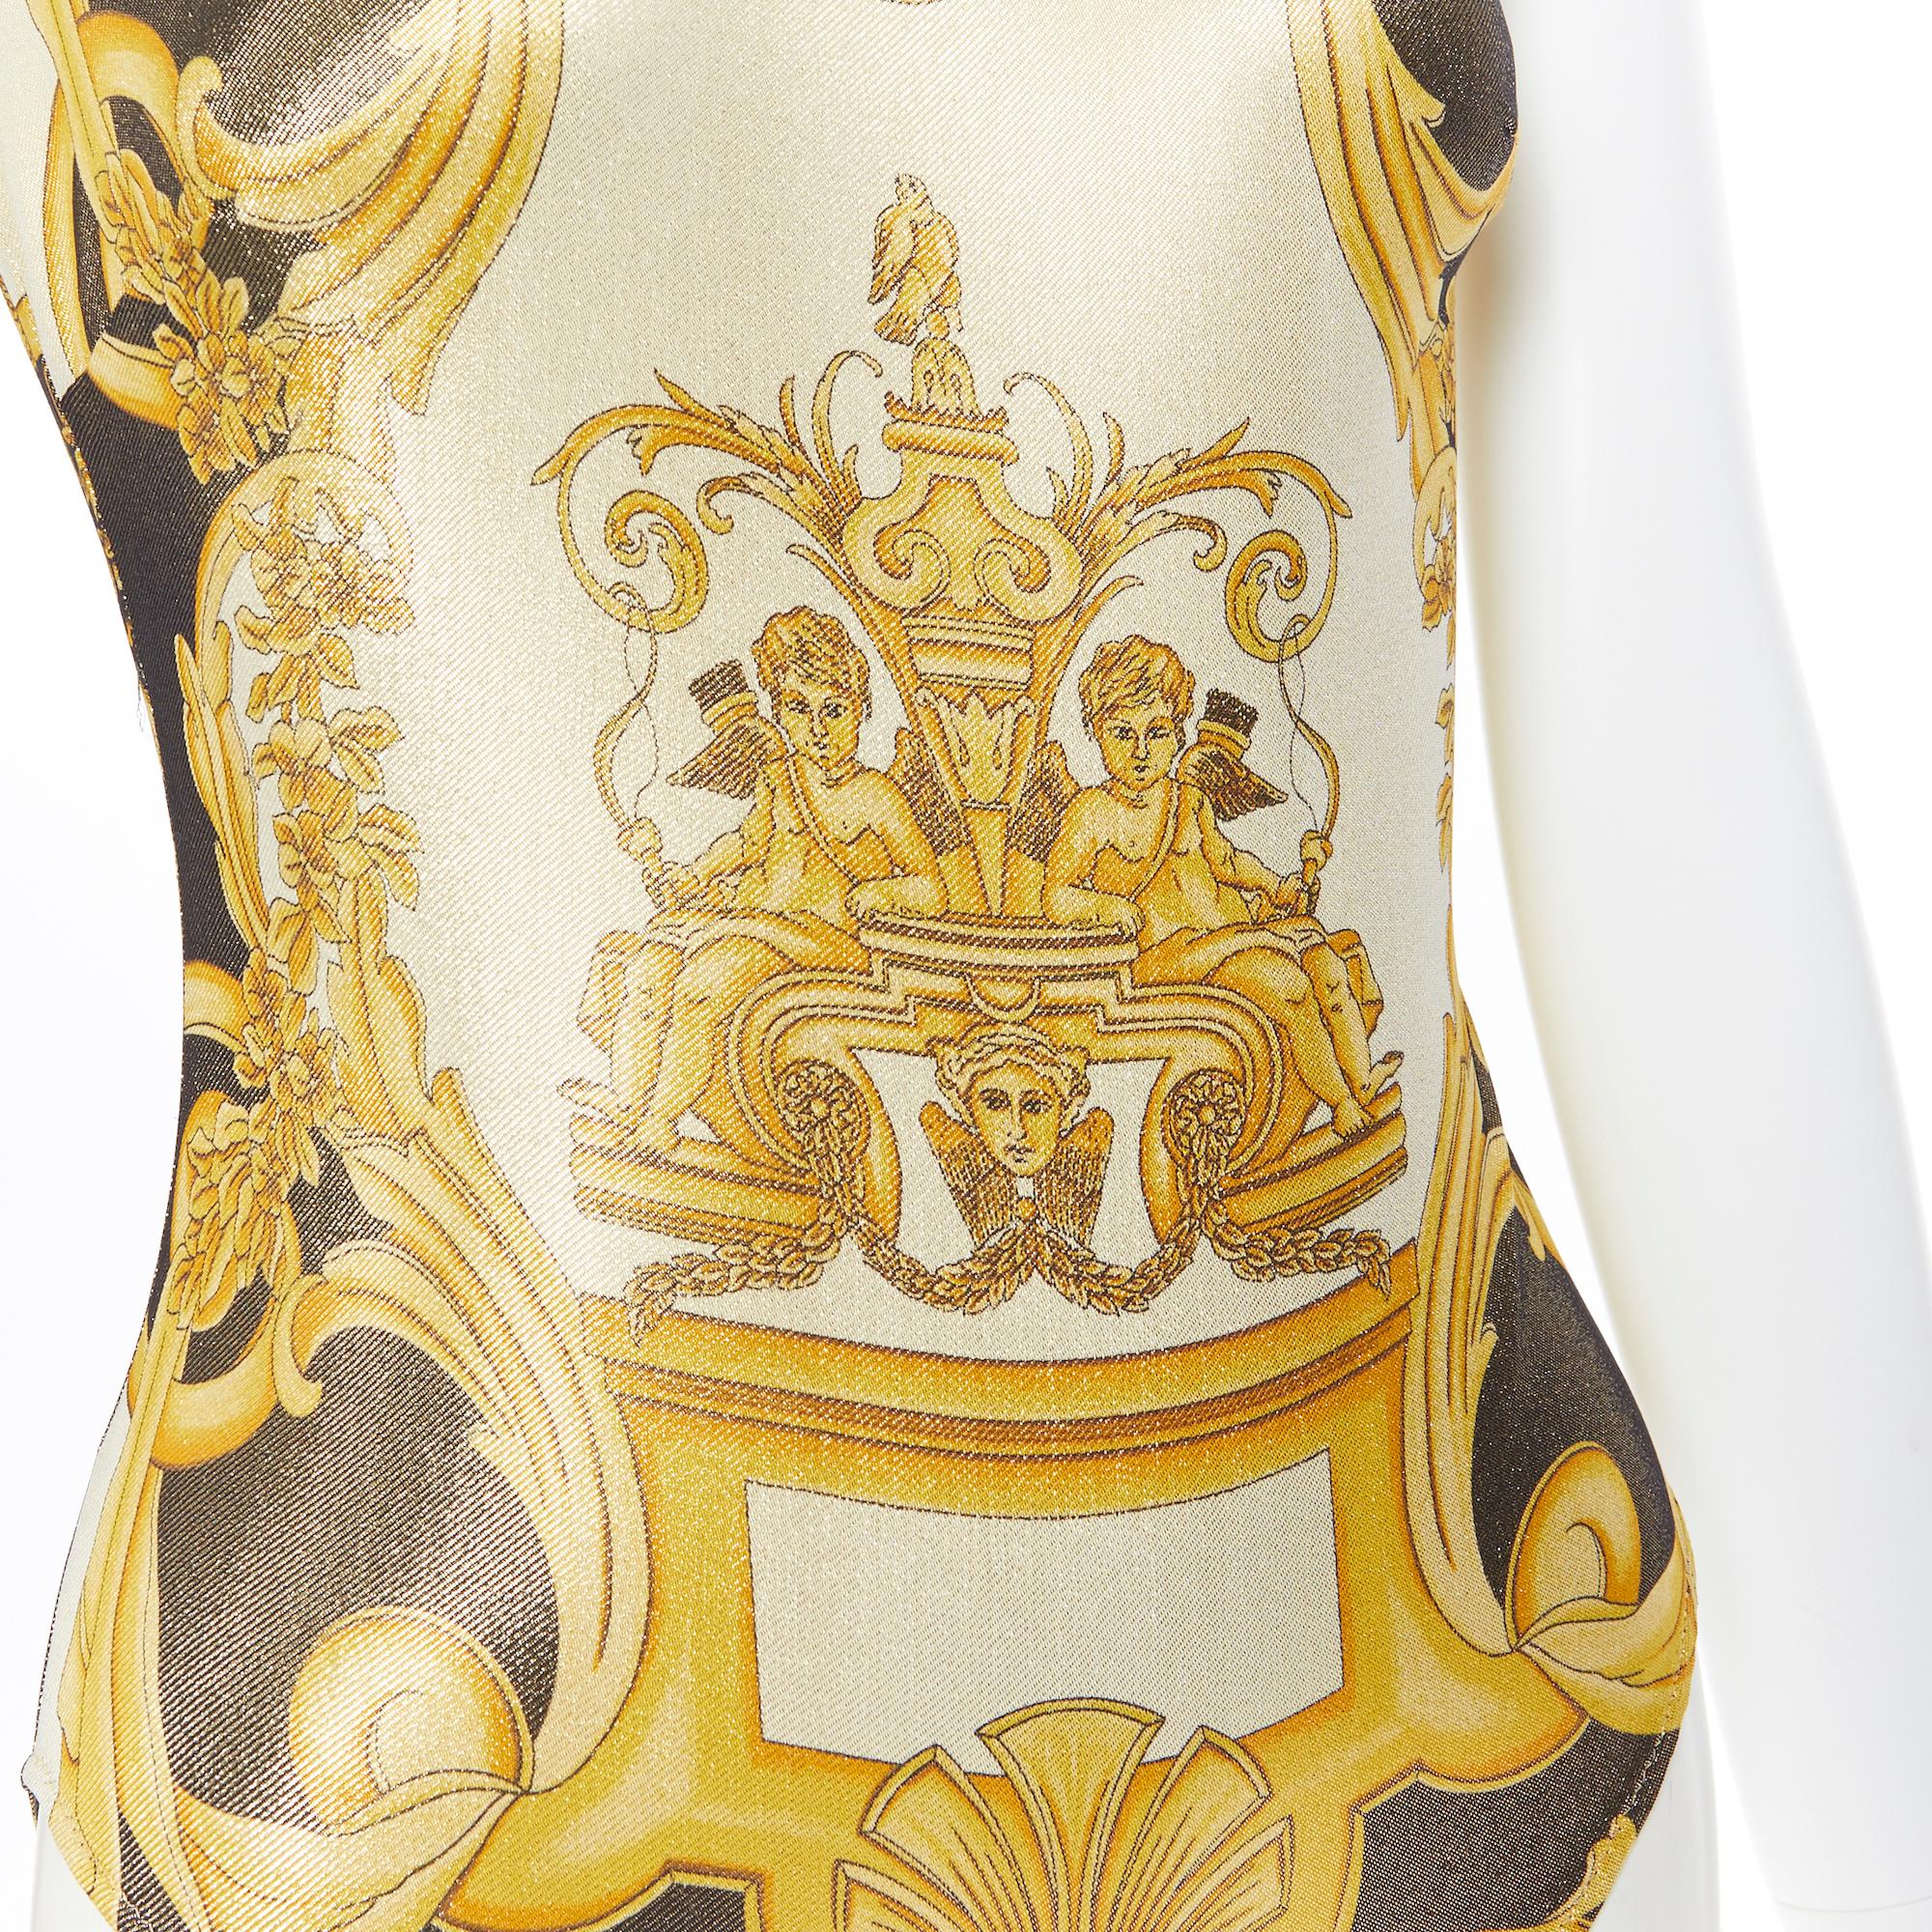 new VERSACE Tribute SS18 Runway Baroque Cherub gold black lurex bodysuit IT38 XS
Brand: Versace
Designer: Donatella Versace
Collection: SS2018
Model Name / Style: Bodysuit top
Material: Polyamide blend
Color: Gold, black
Pattern: Floral
Closure: